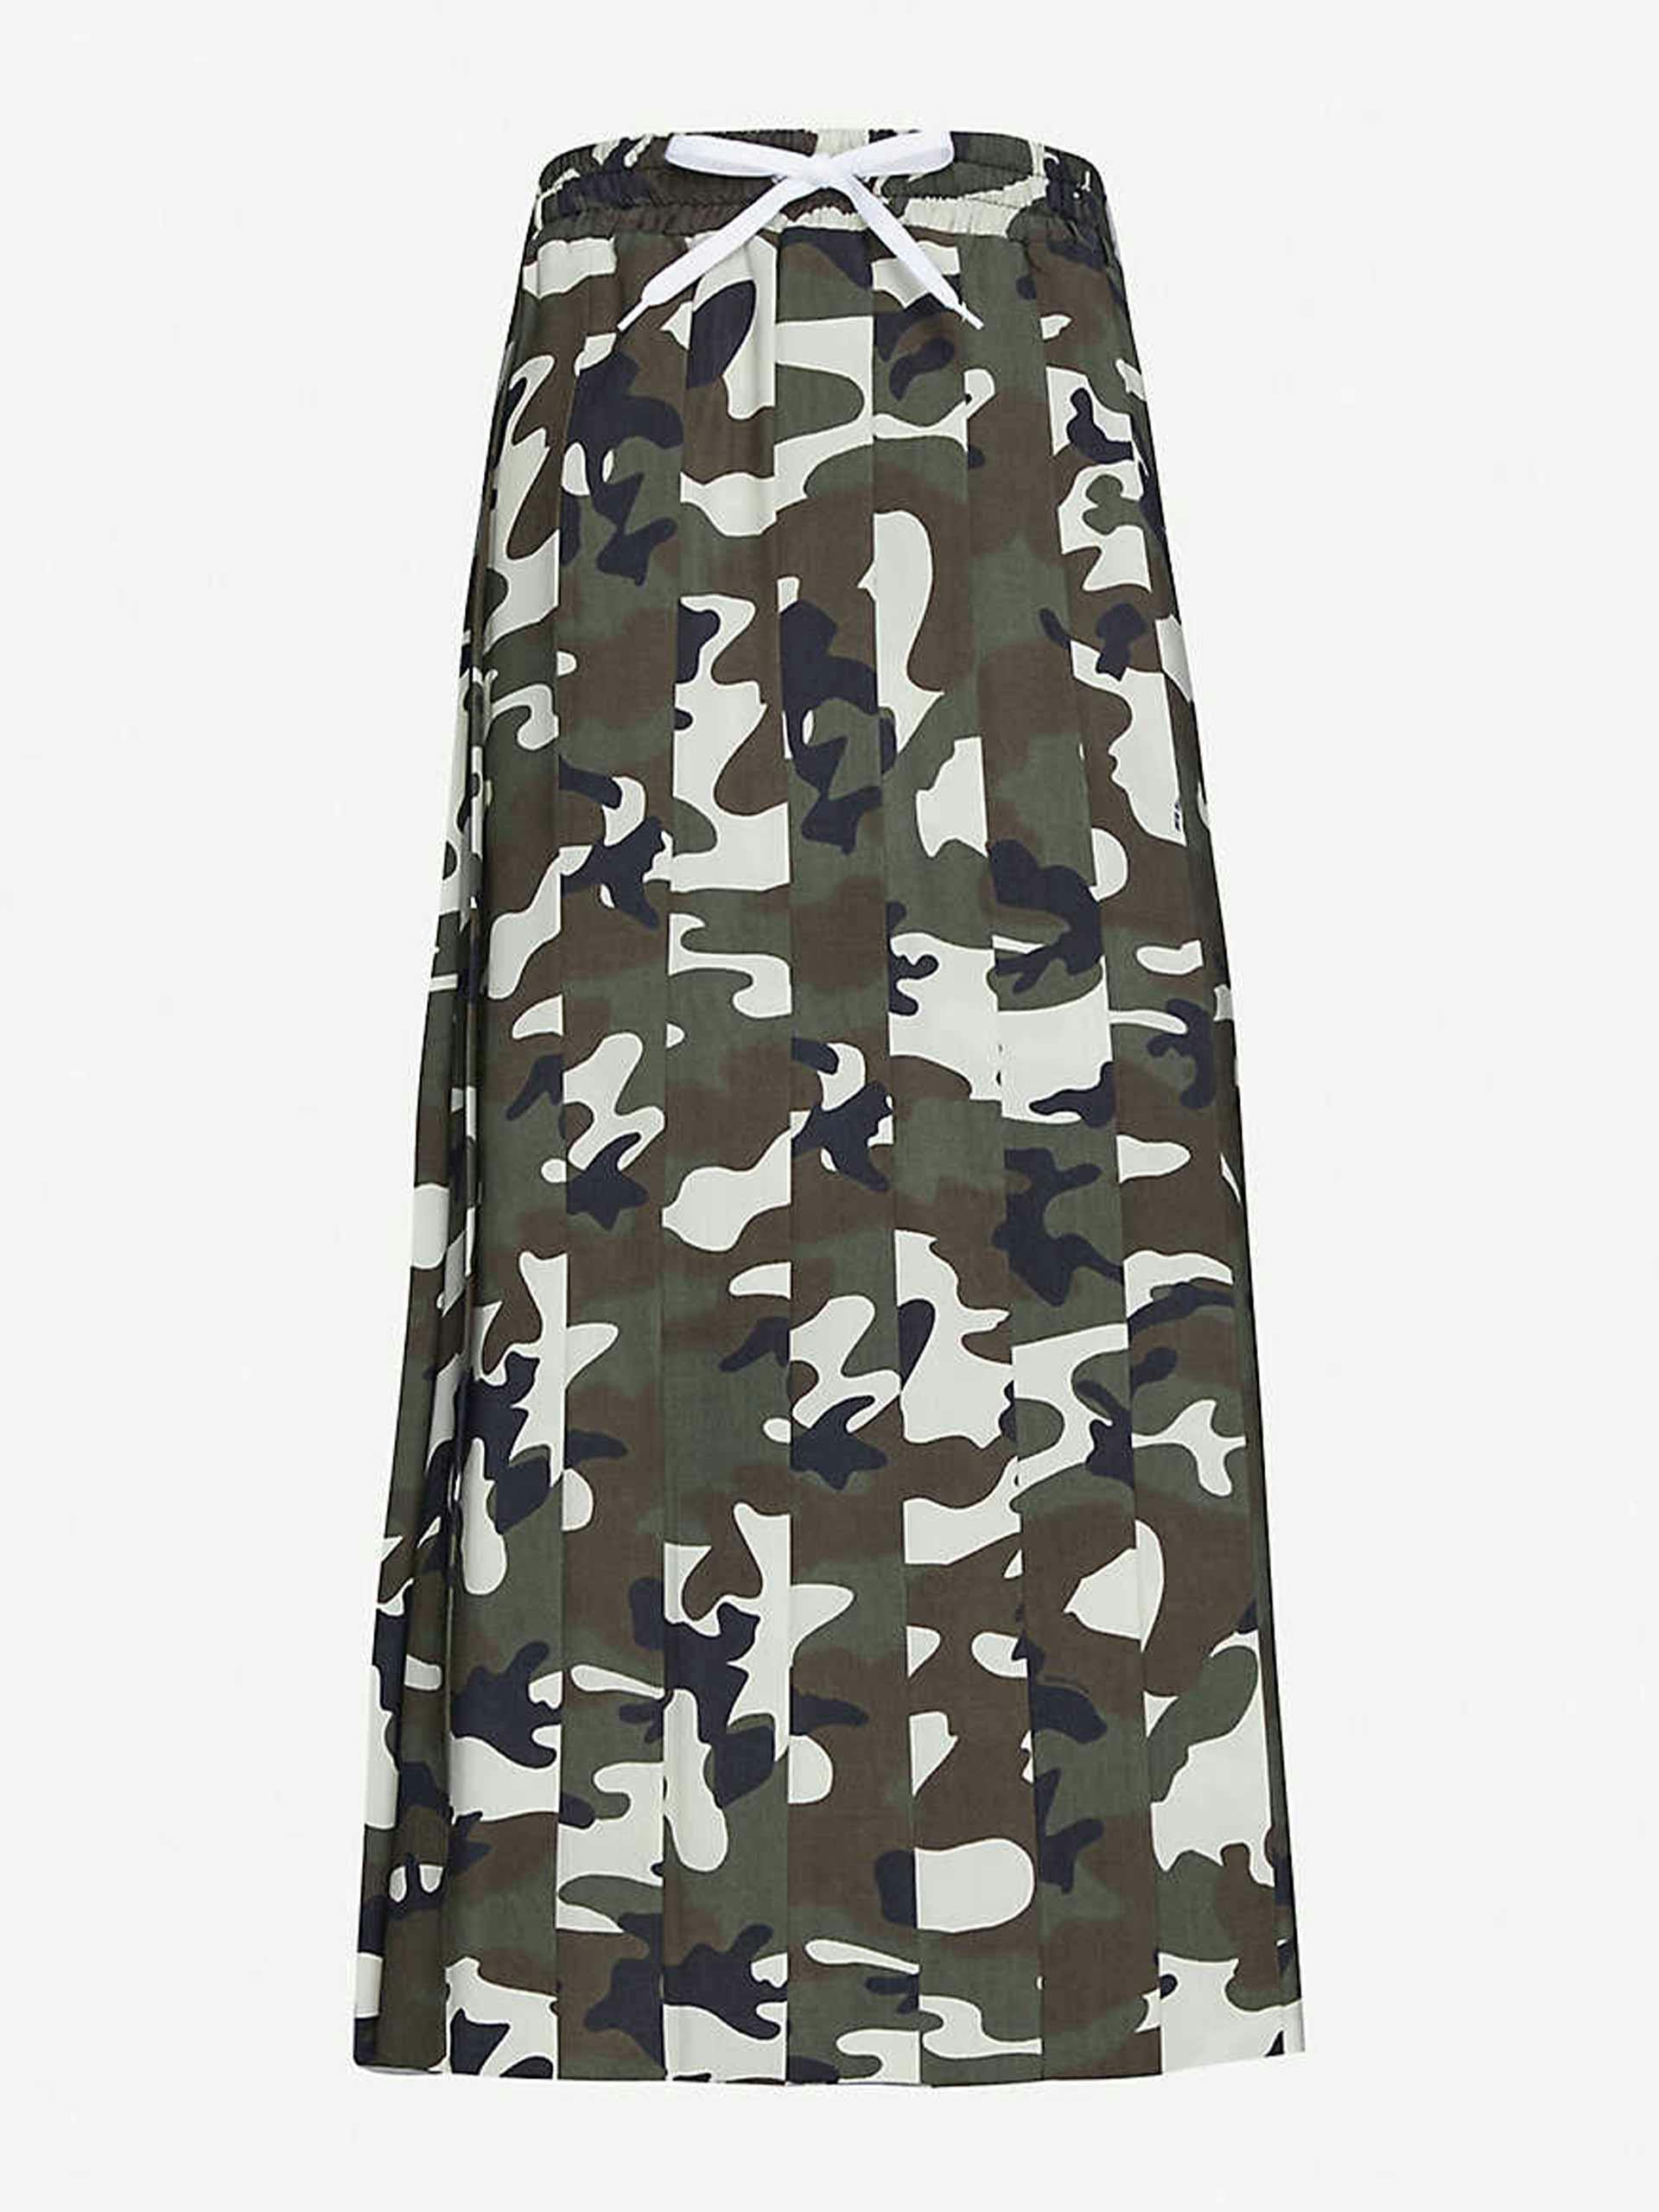 Camouflage skirt